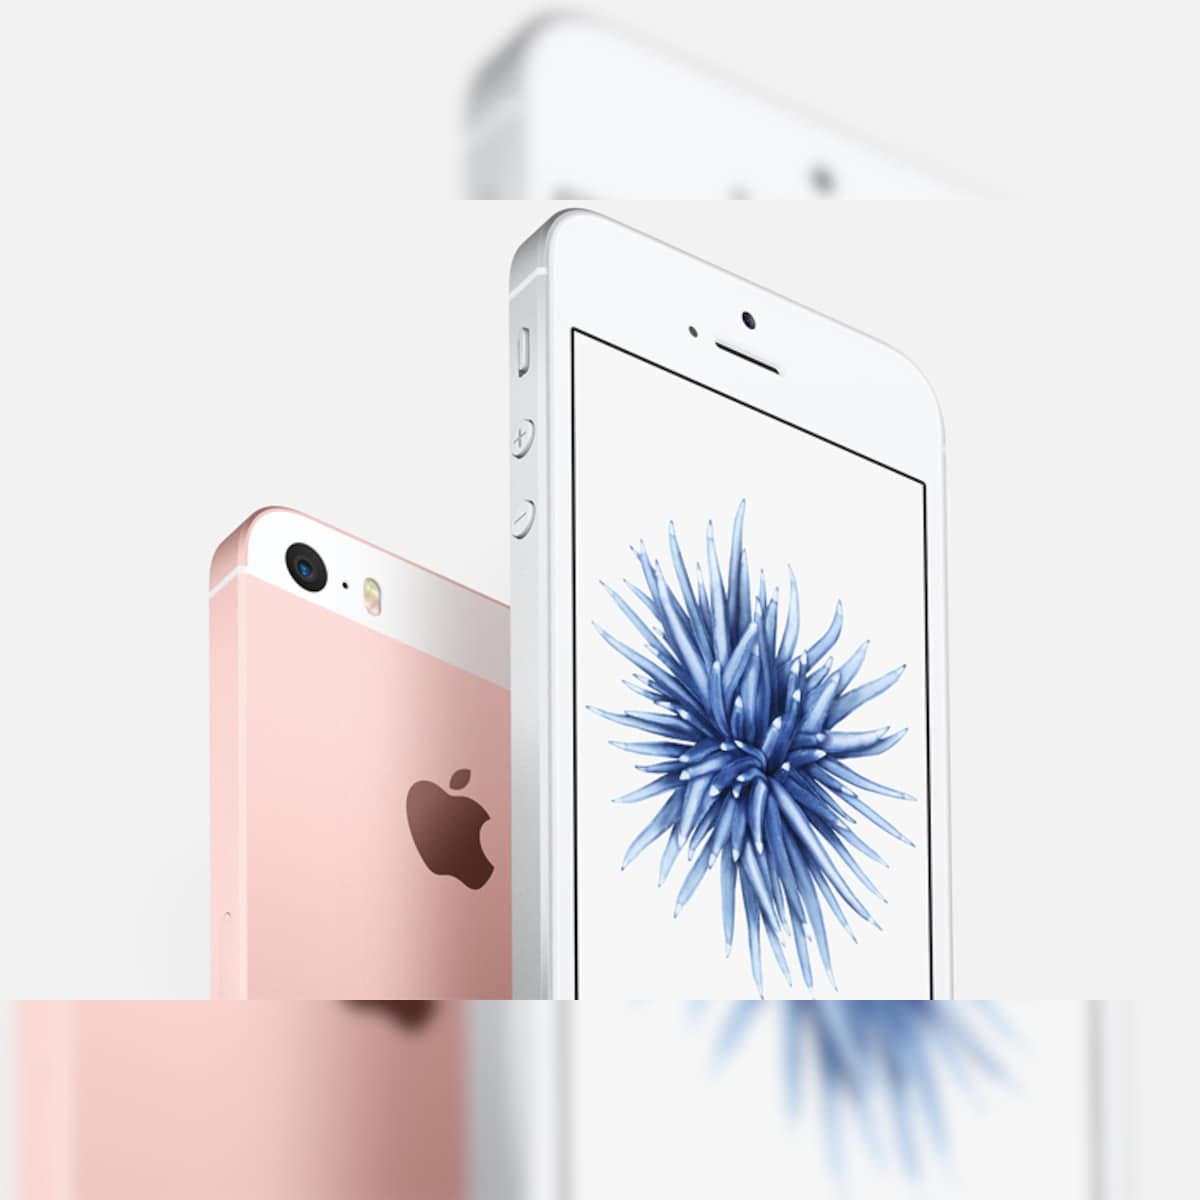 Verheugen royalty Afdrukken Photos: iPhone SE, Apple's new 4-inch iPhone that looks almost like the iPhone  5s